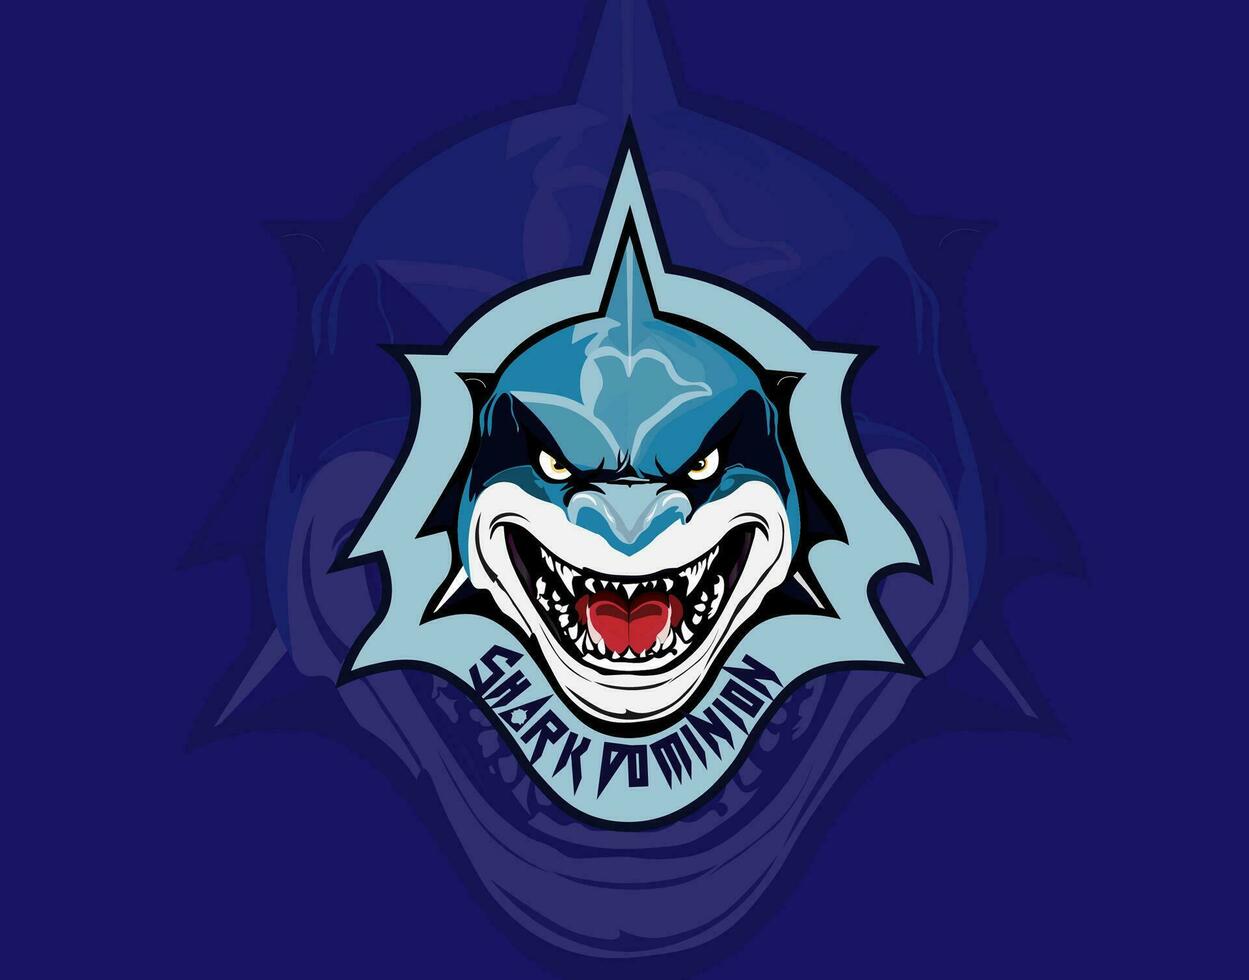 Shark dominion logo template. For e sport gaming, sports team, t shirt design, banner, poster, adversitement. vector